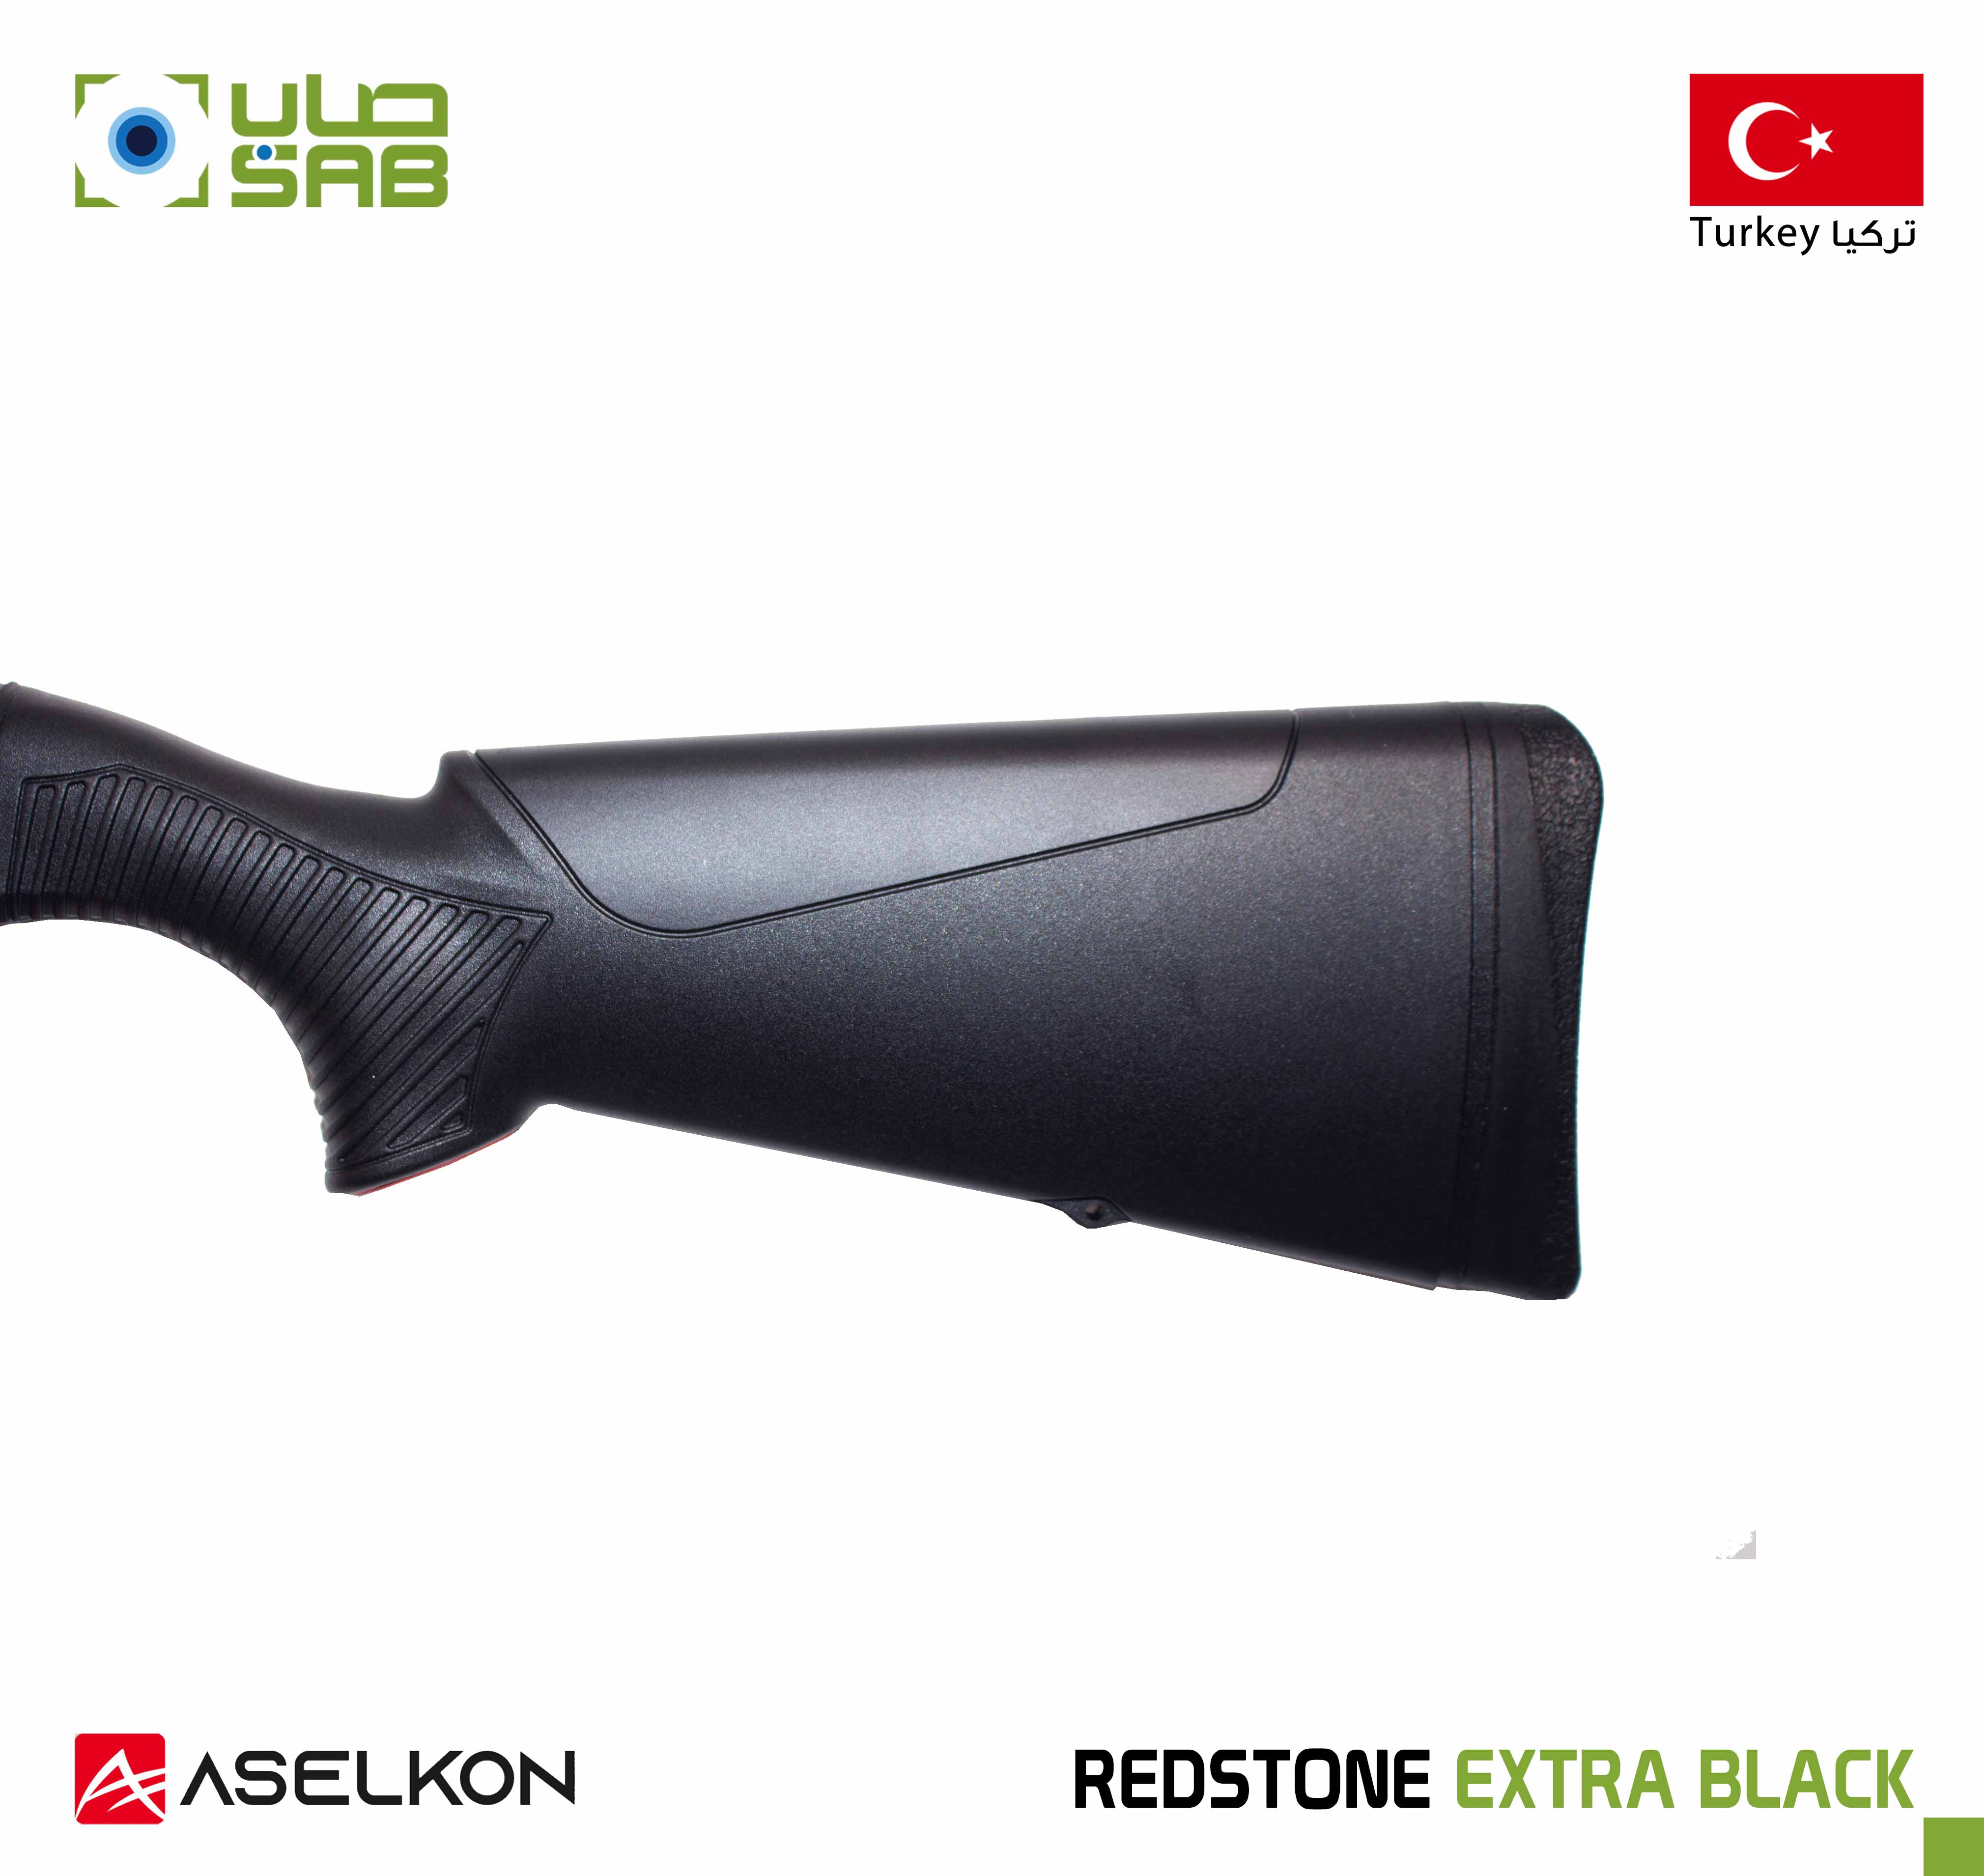 12 G - Aselkon - REDSTONE EXTRA BLACK 30" POLYMER